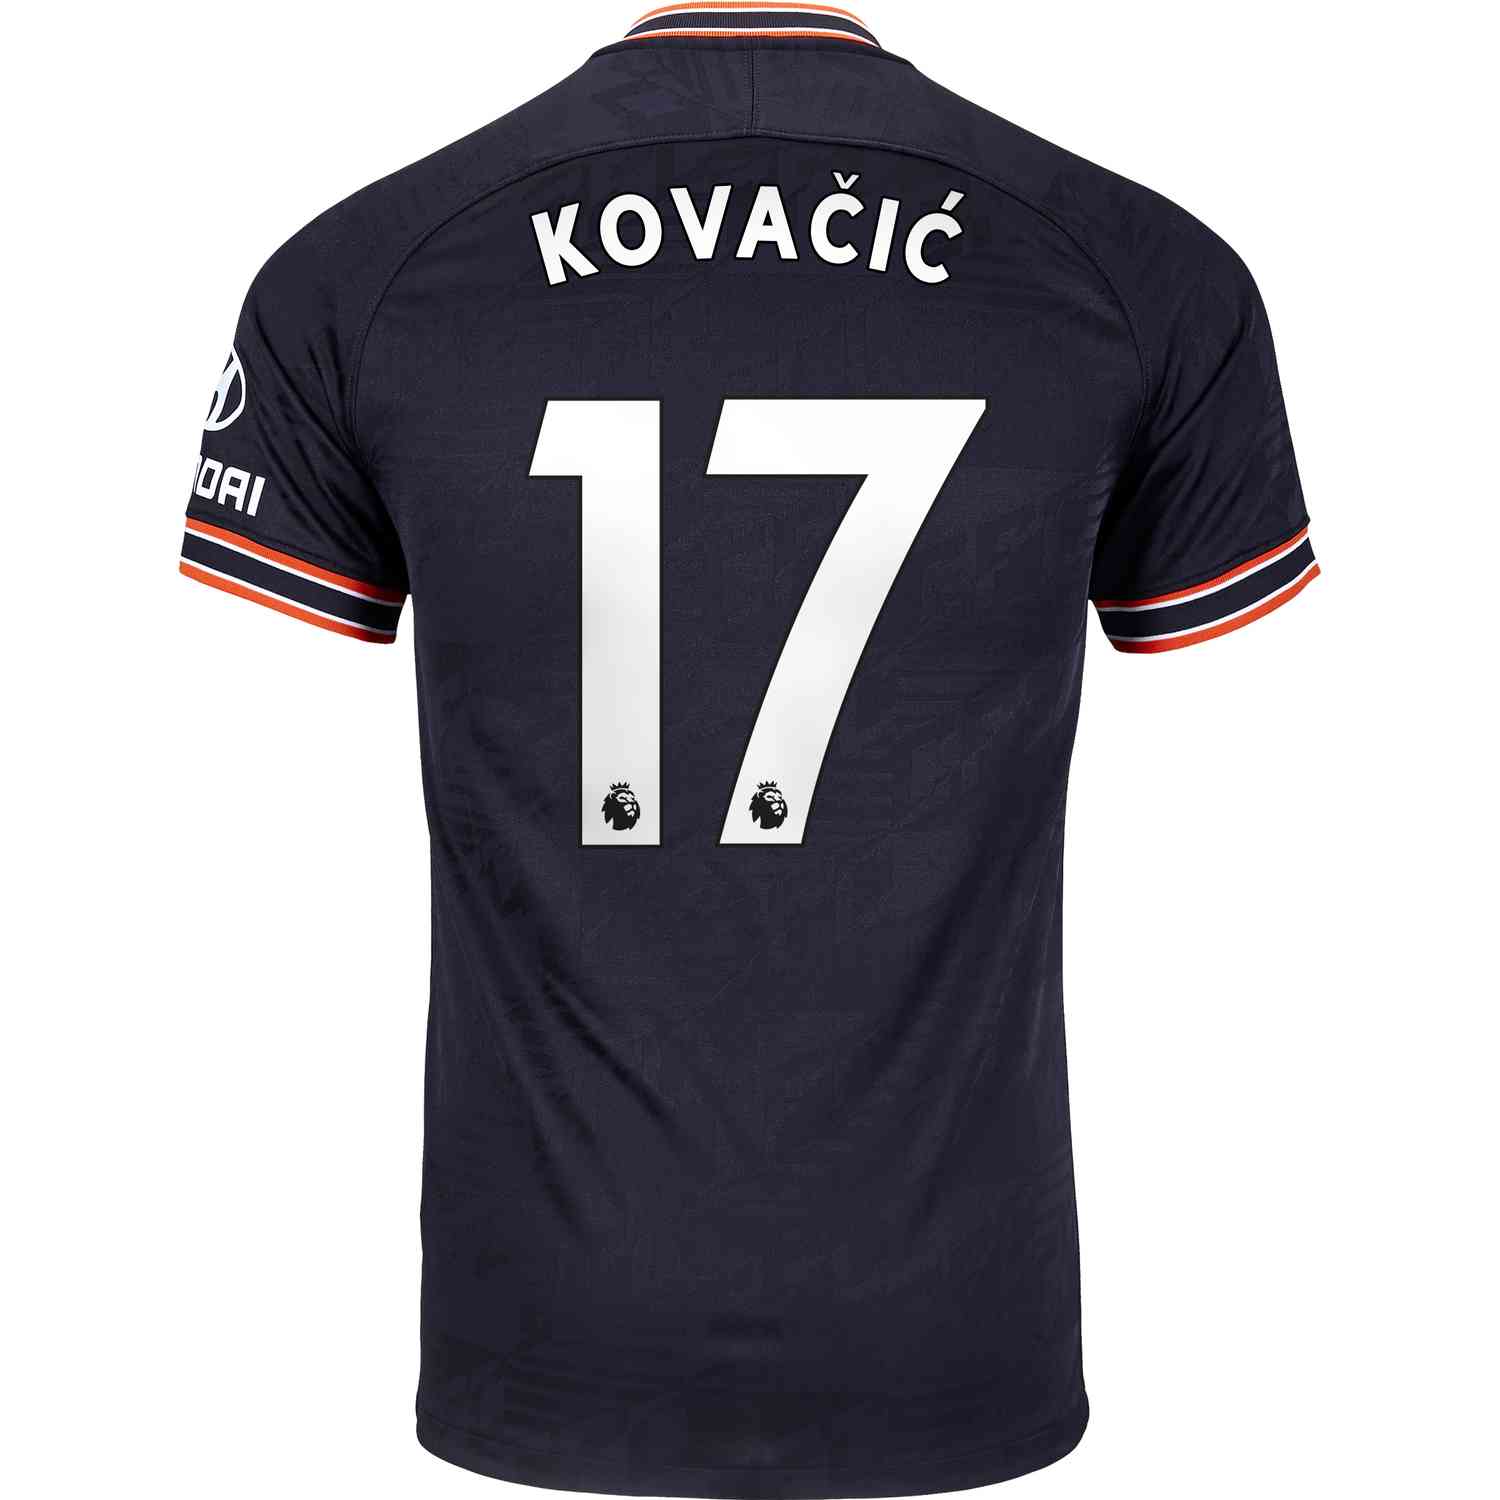 kovacic kit number